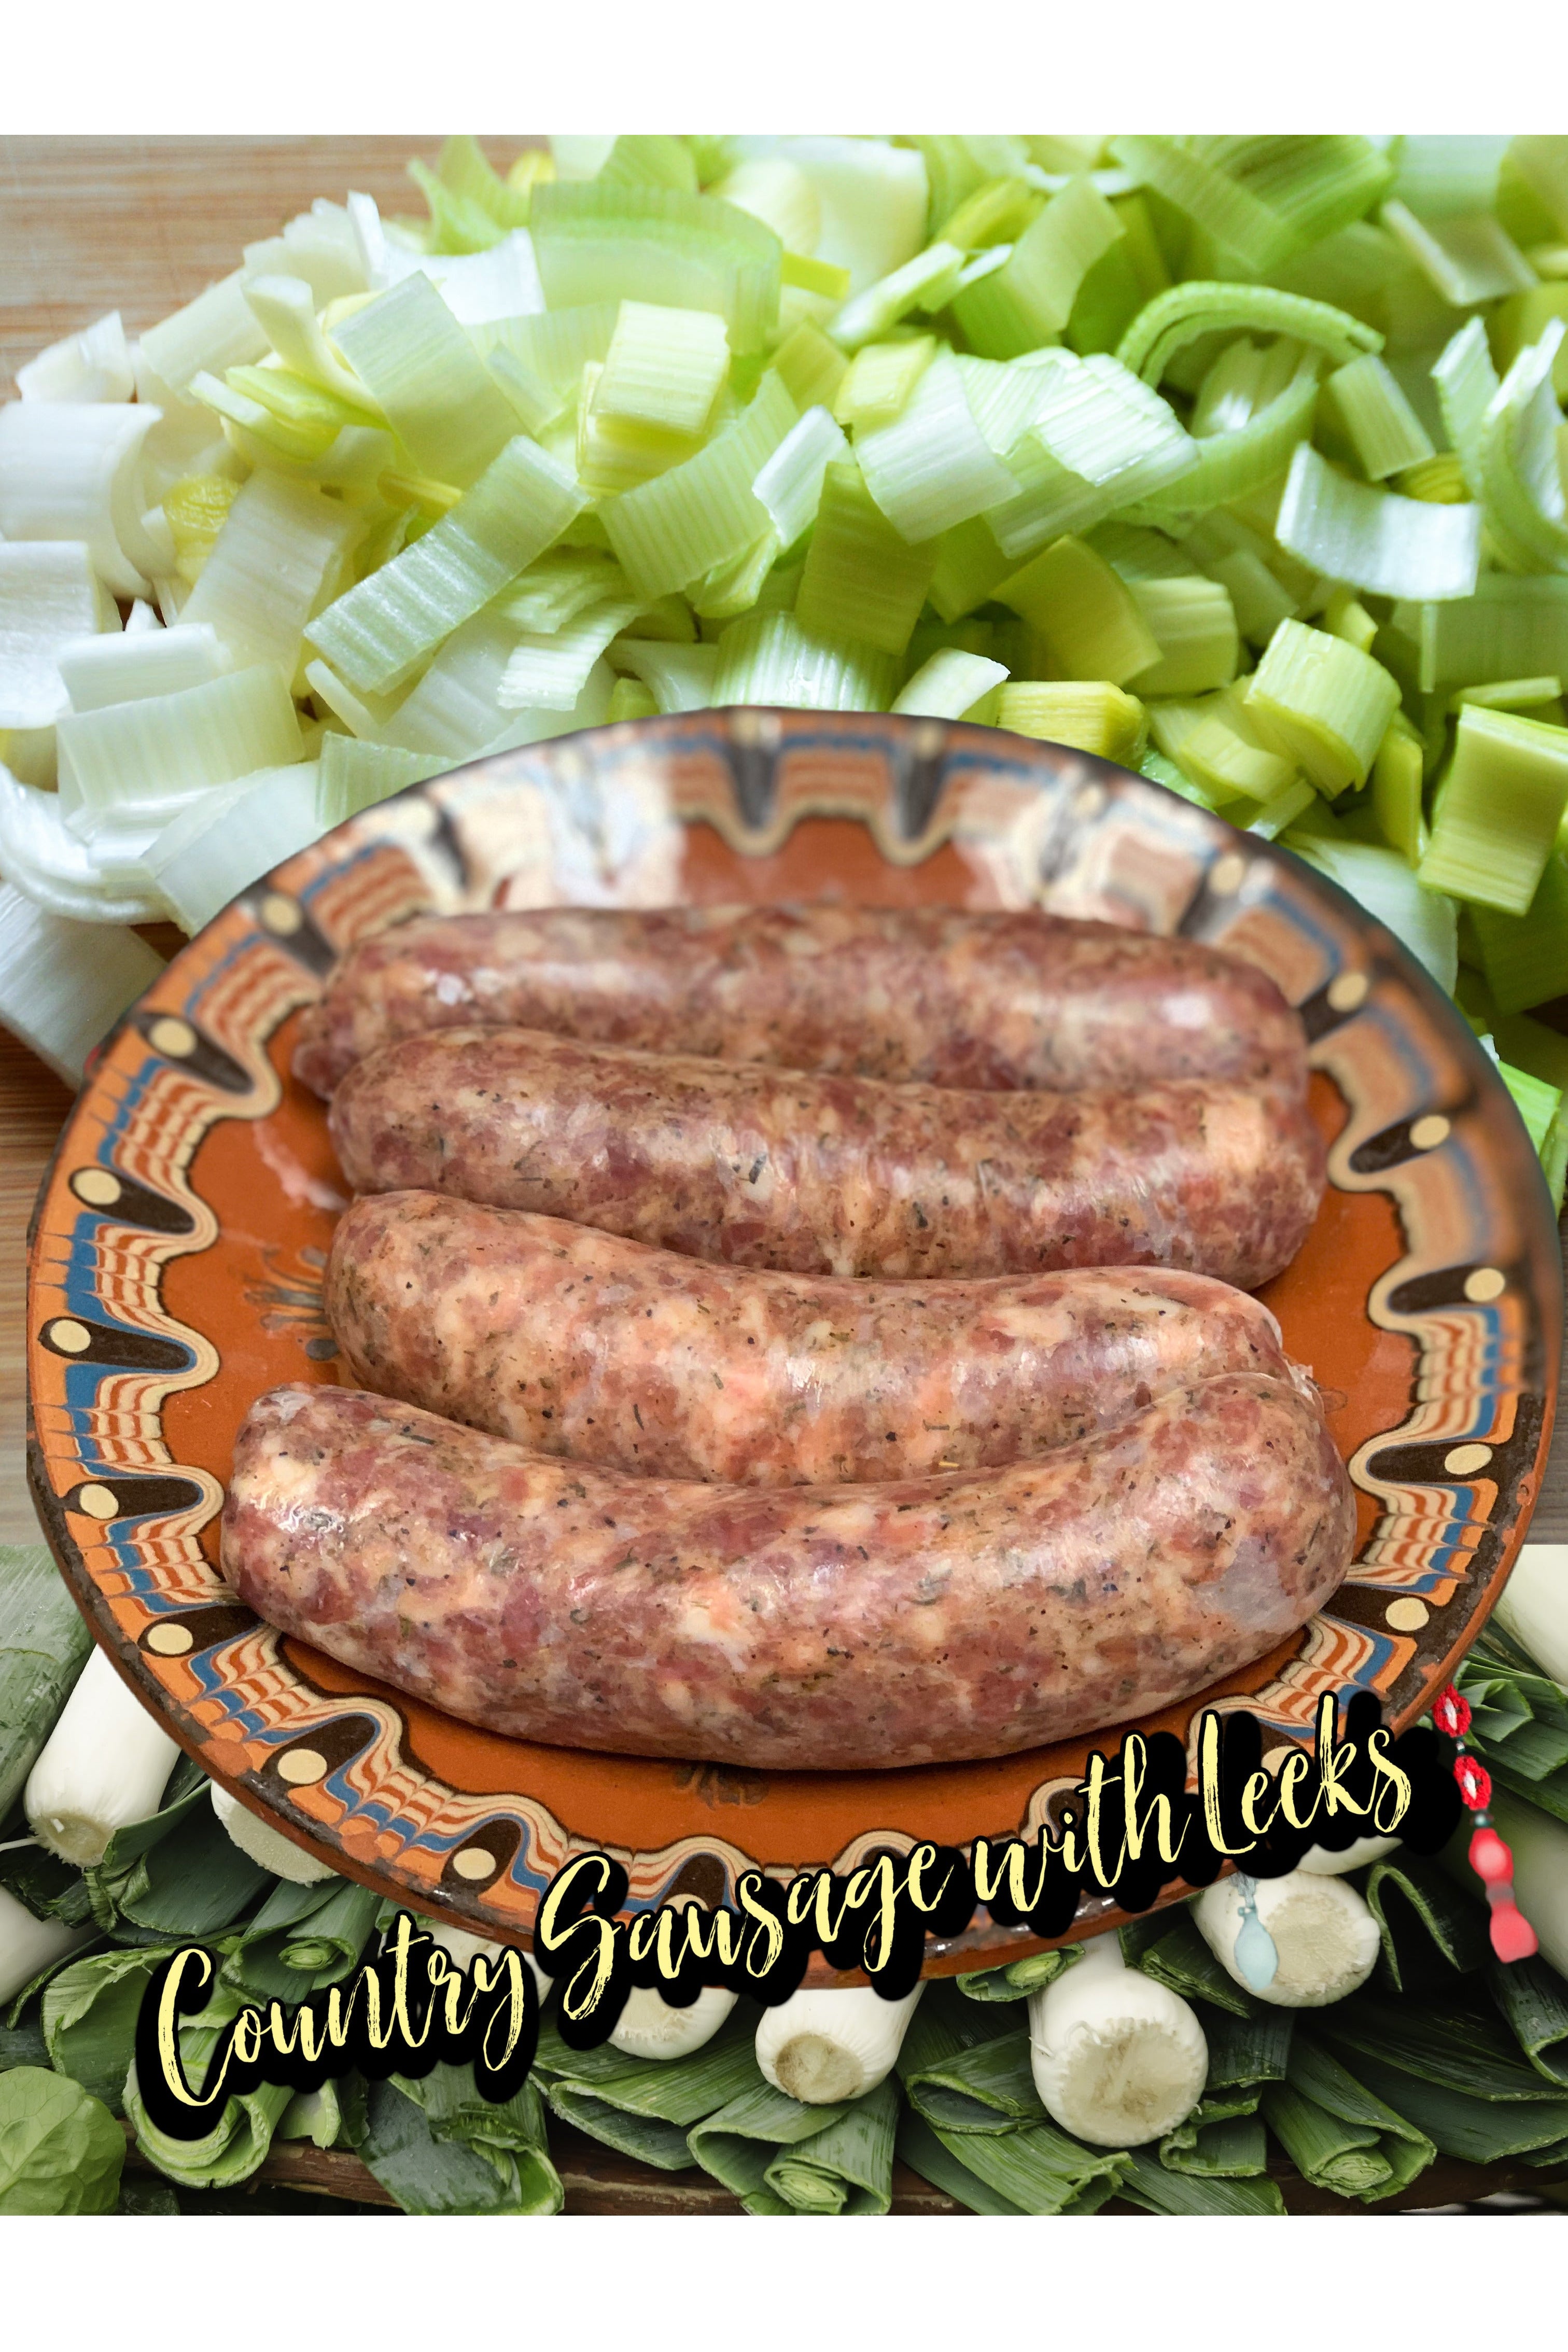 Selska Nadenica s PRAZ - Bulgarian Country Sausage with LEEKS - 1 lb